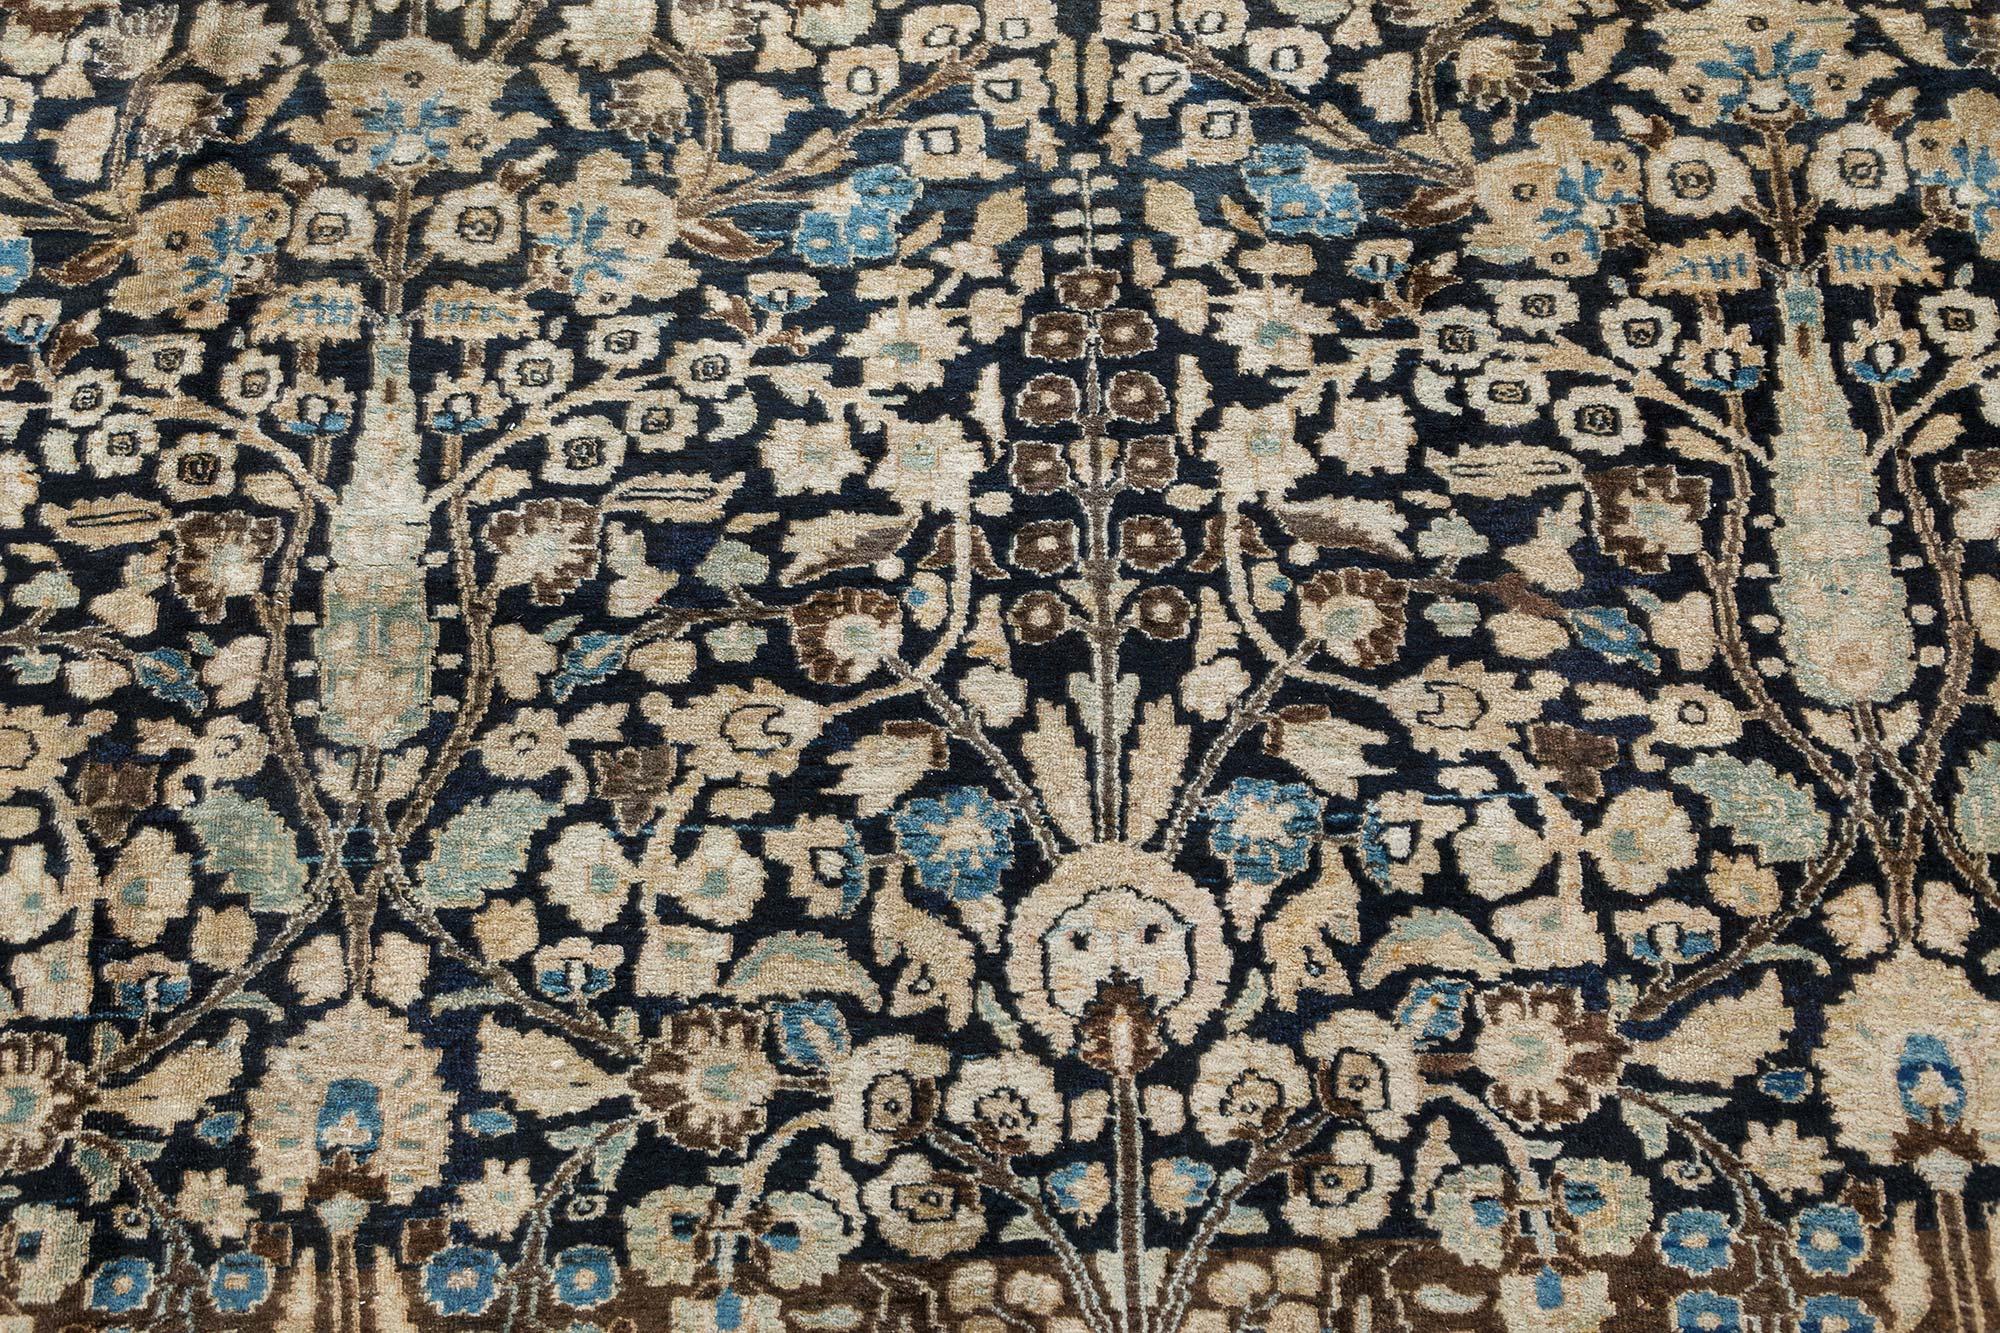 Authentic 19th century Persian Meshad carpet.
Size: 12'5